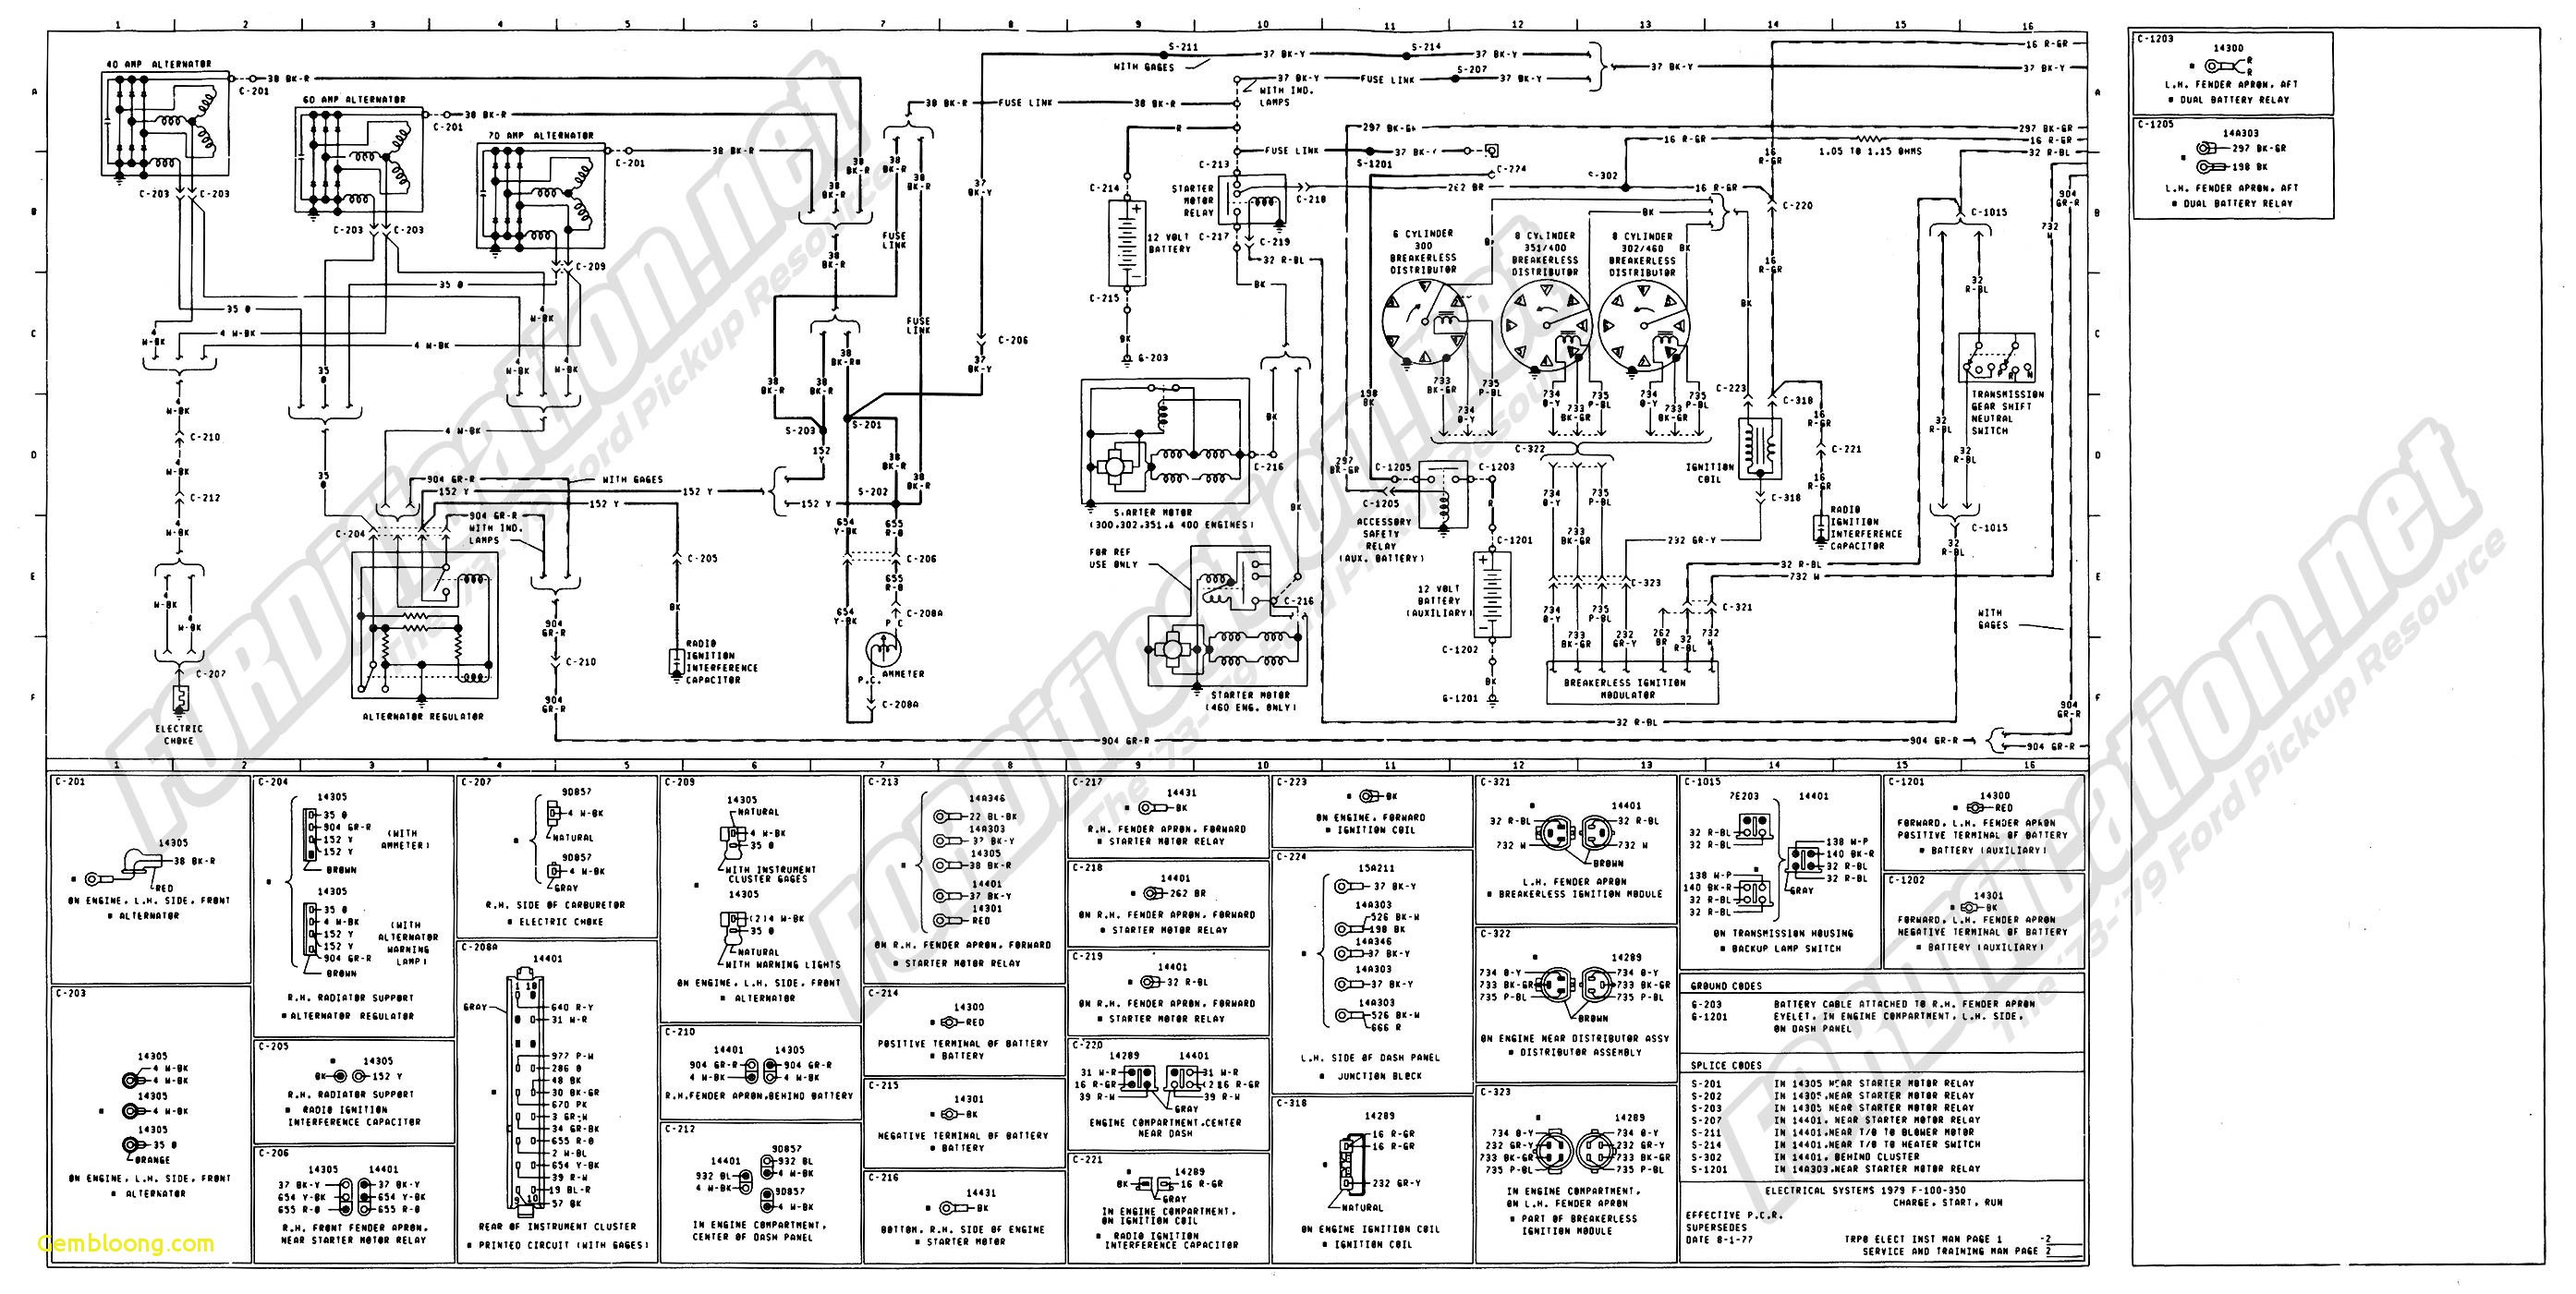 Ford F700 Brake System Diagram 1996 ford F700 Wiring Schematic Of Ford F700 Brake System Diagram